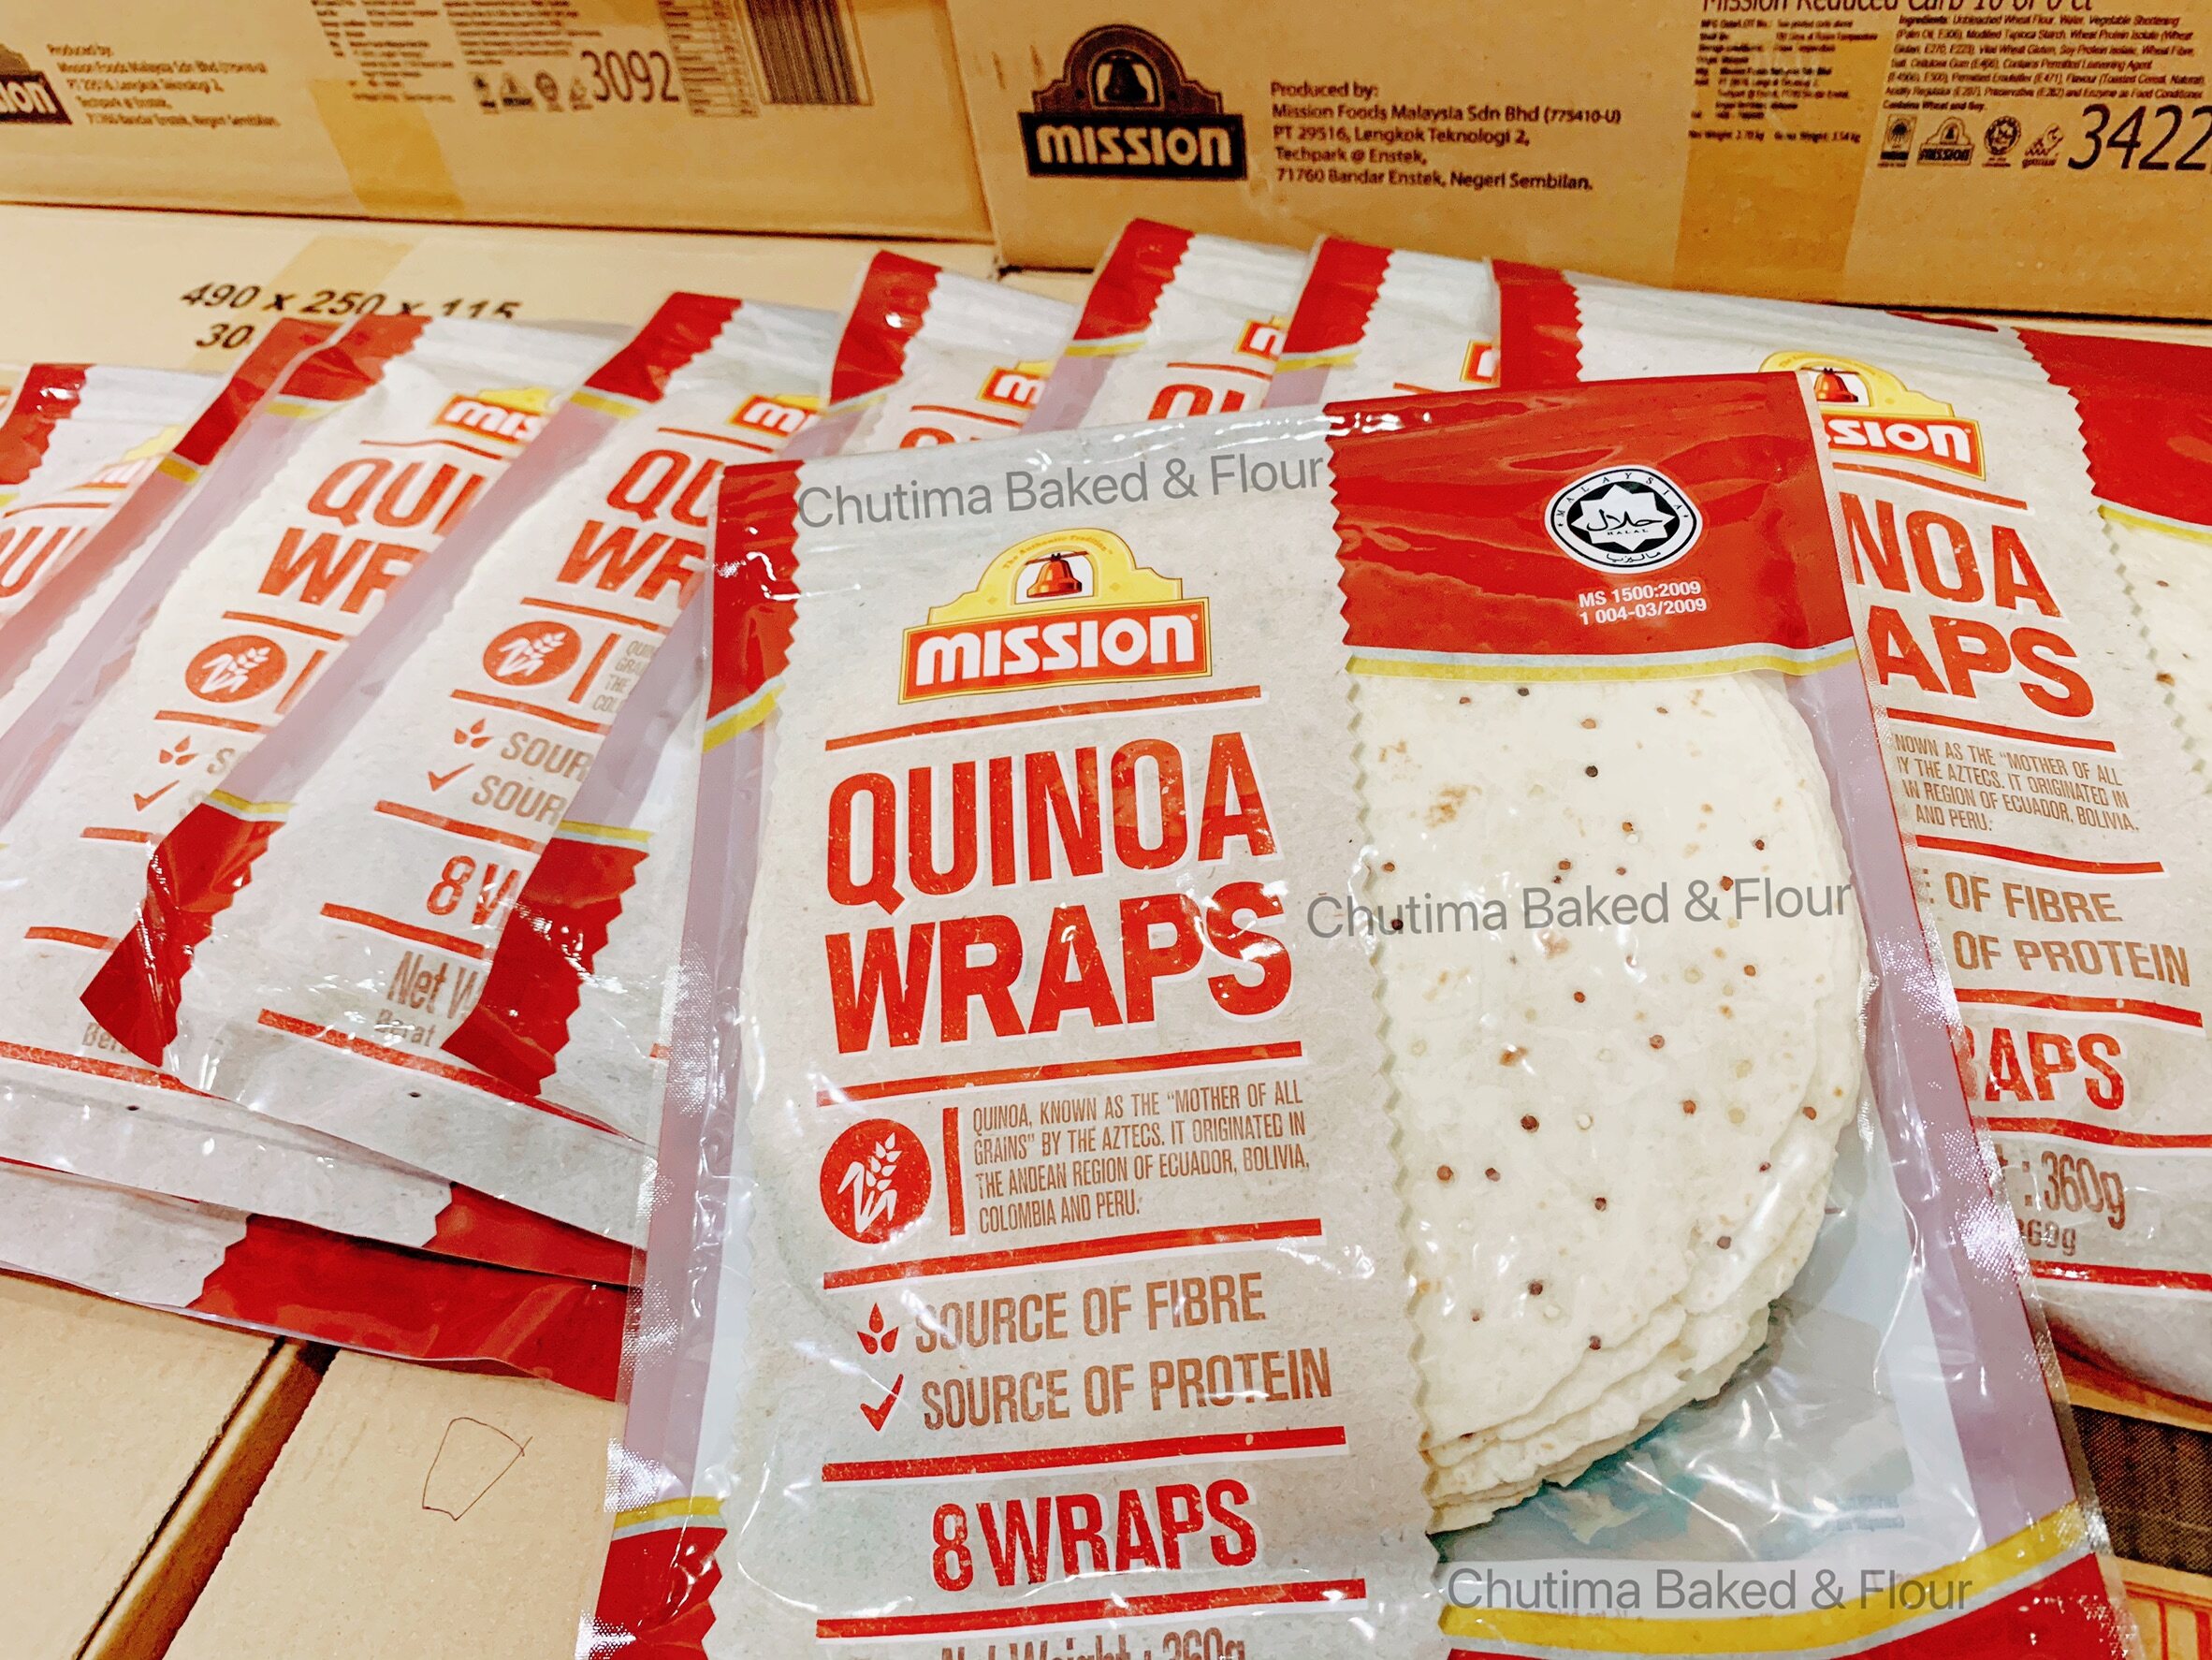 Quinoa Wraps mission 8serv. ควีนิว แรพส์ จำนวน 8แผ่น 360กรัม